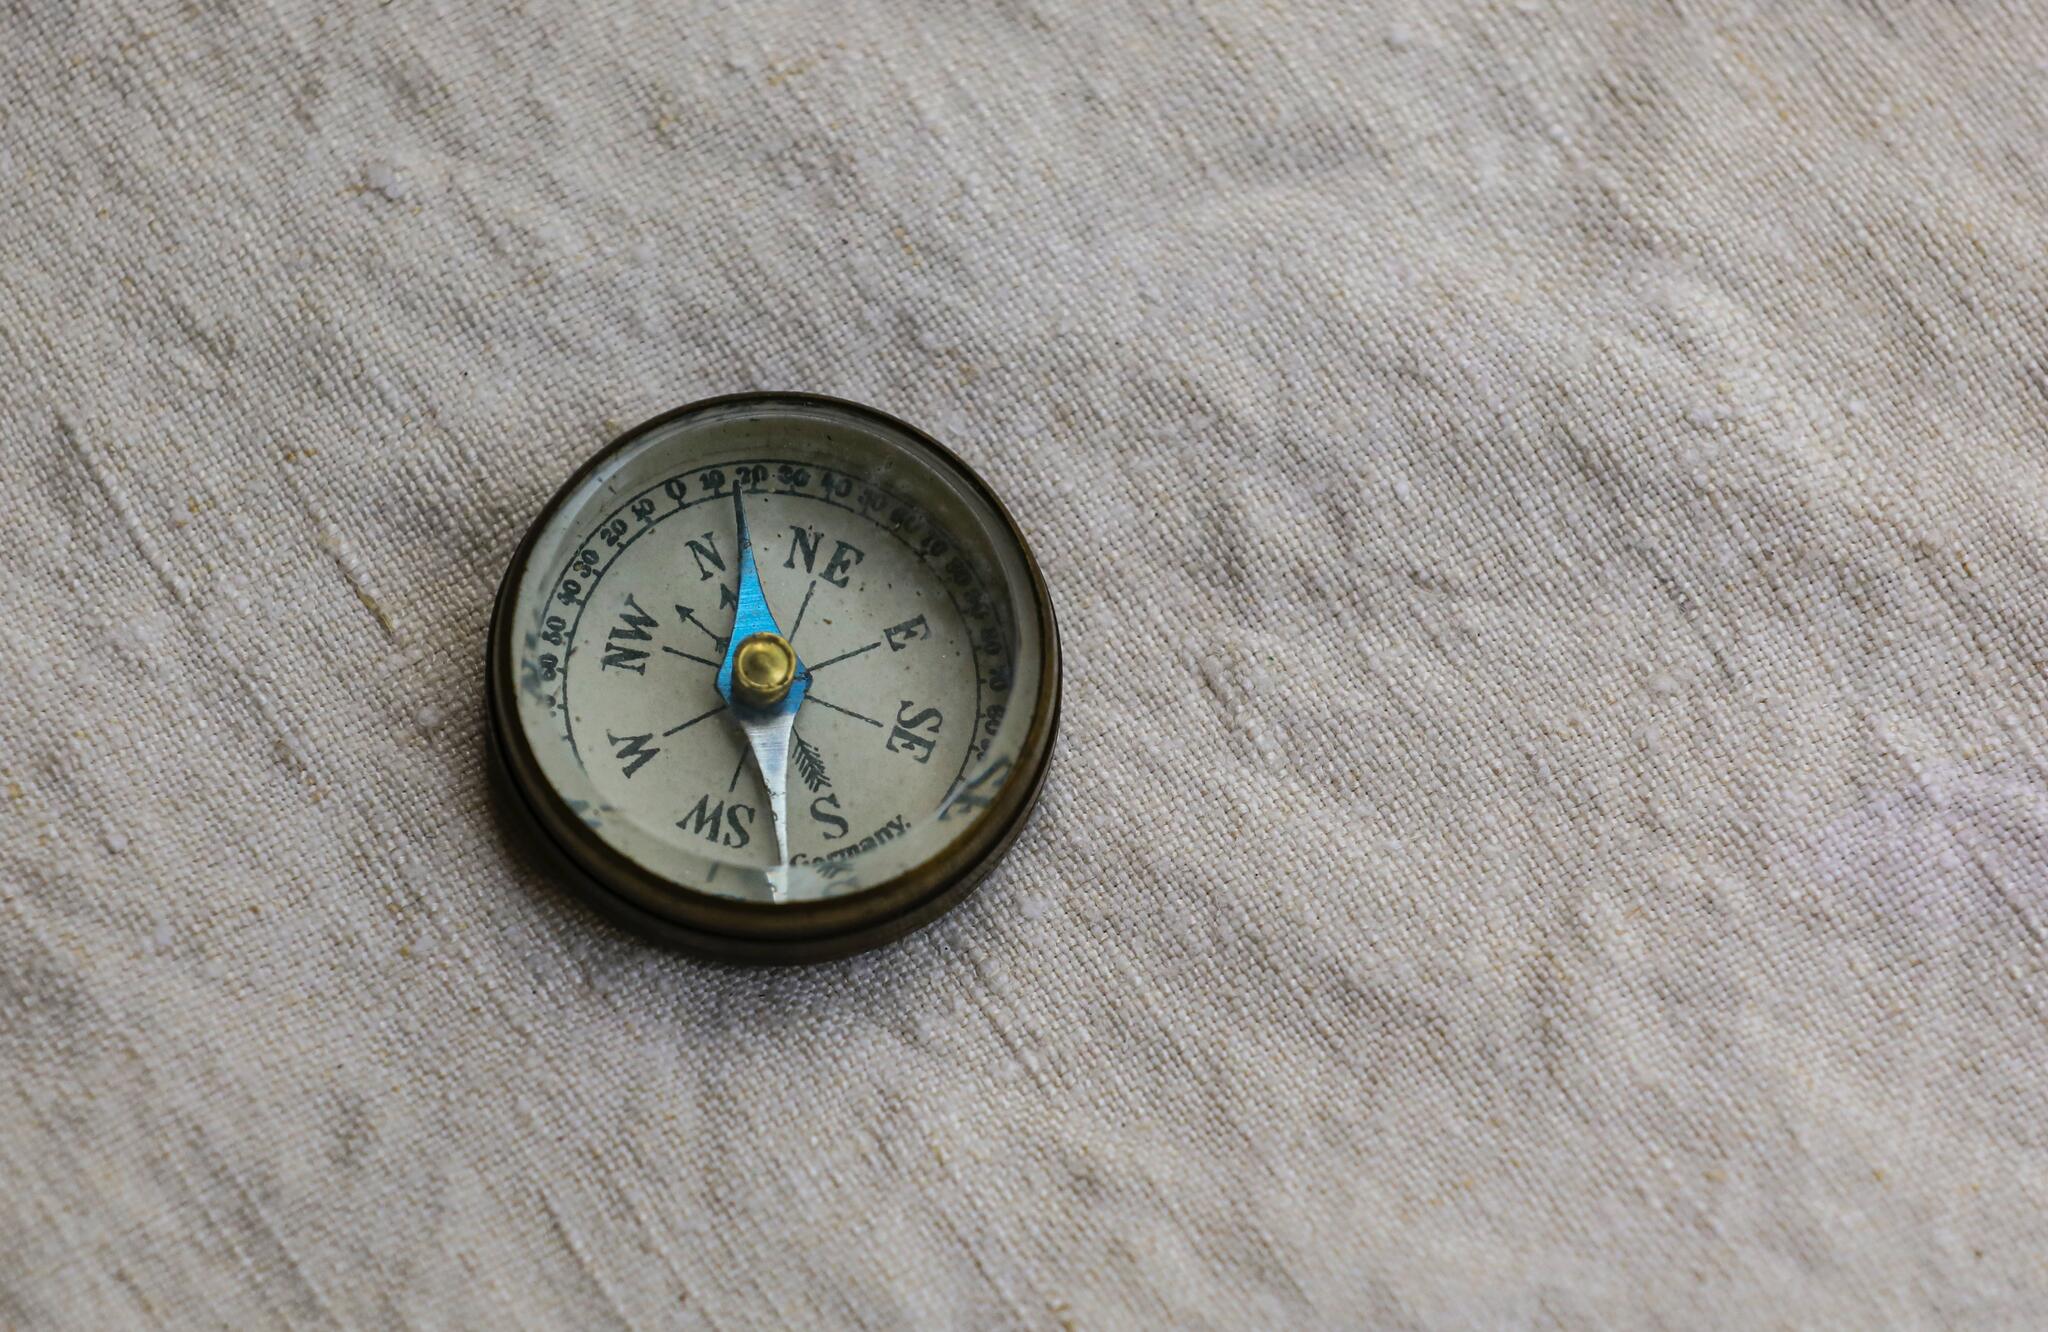 A compass sits on a beige linen cloth.